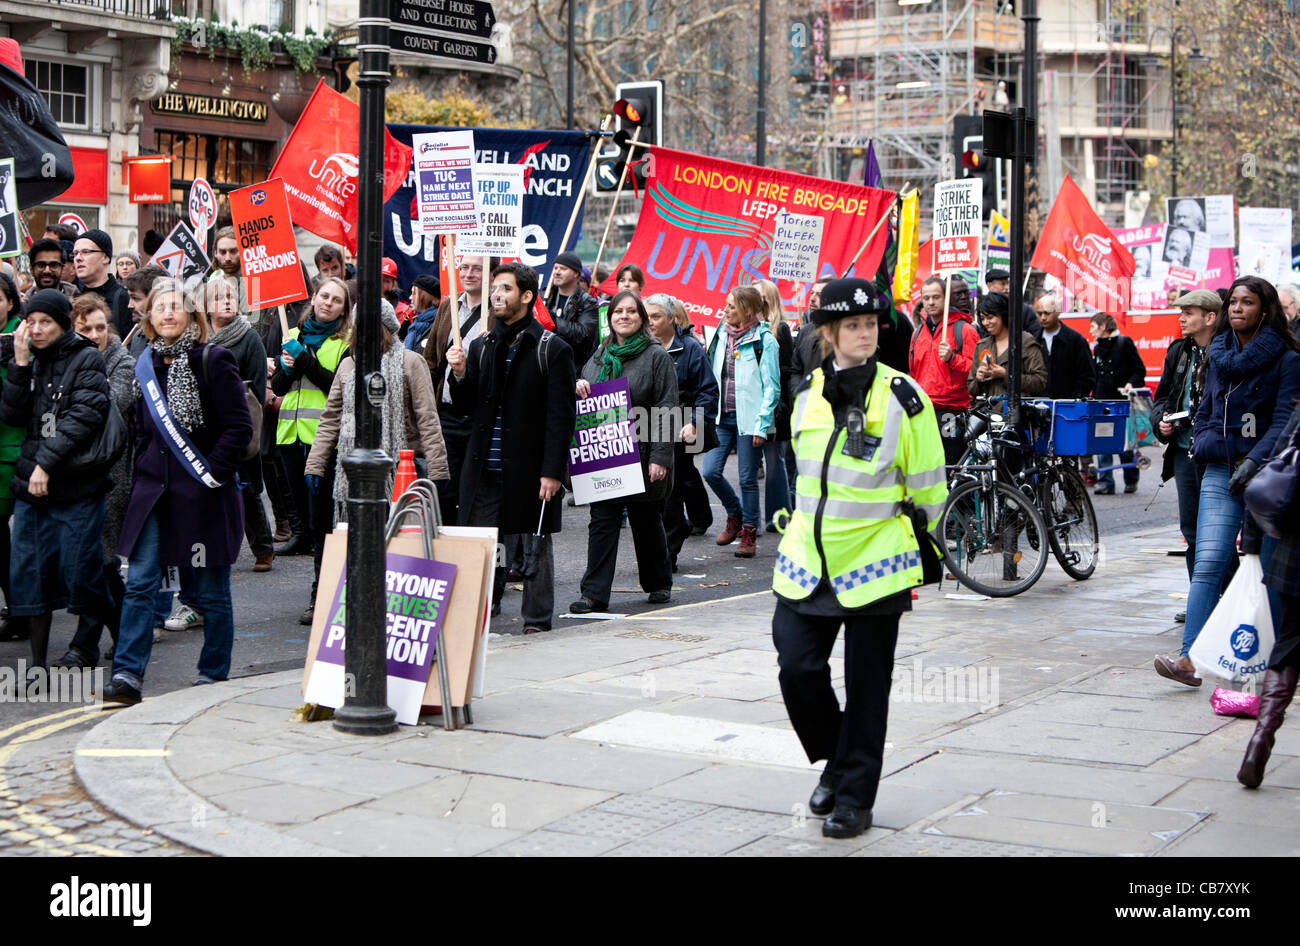 Public sector strike (the unions), London, England, UK, 2011 Stock Photo